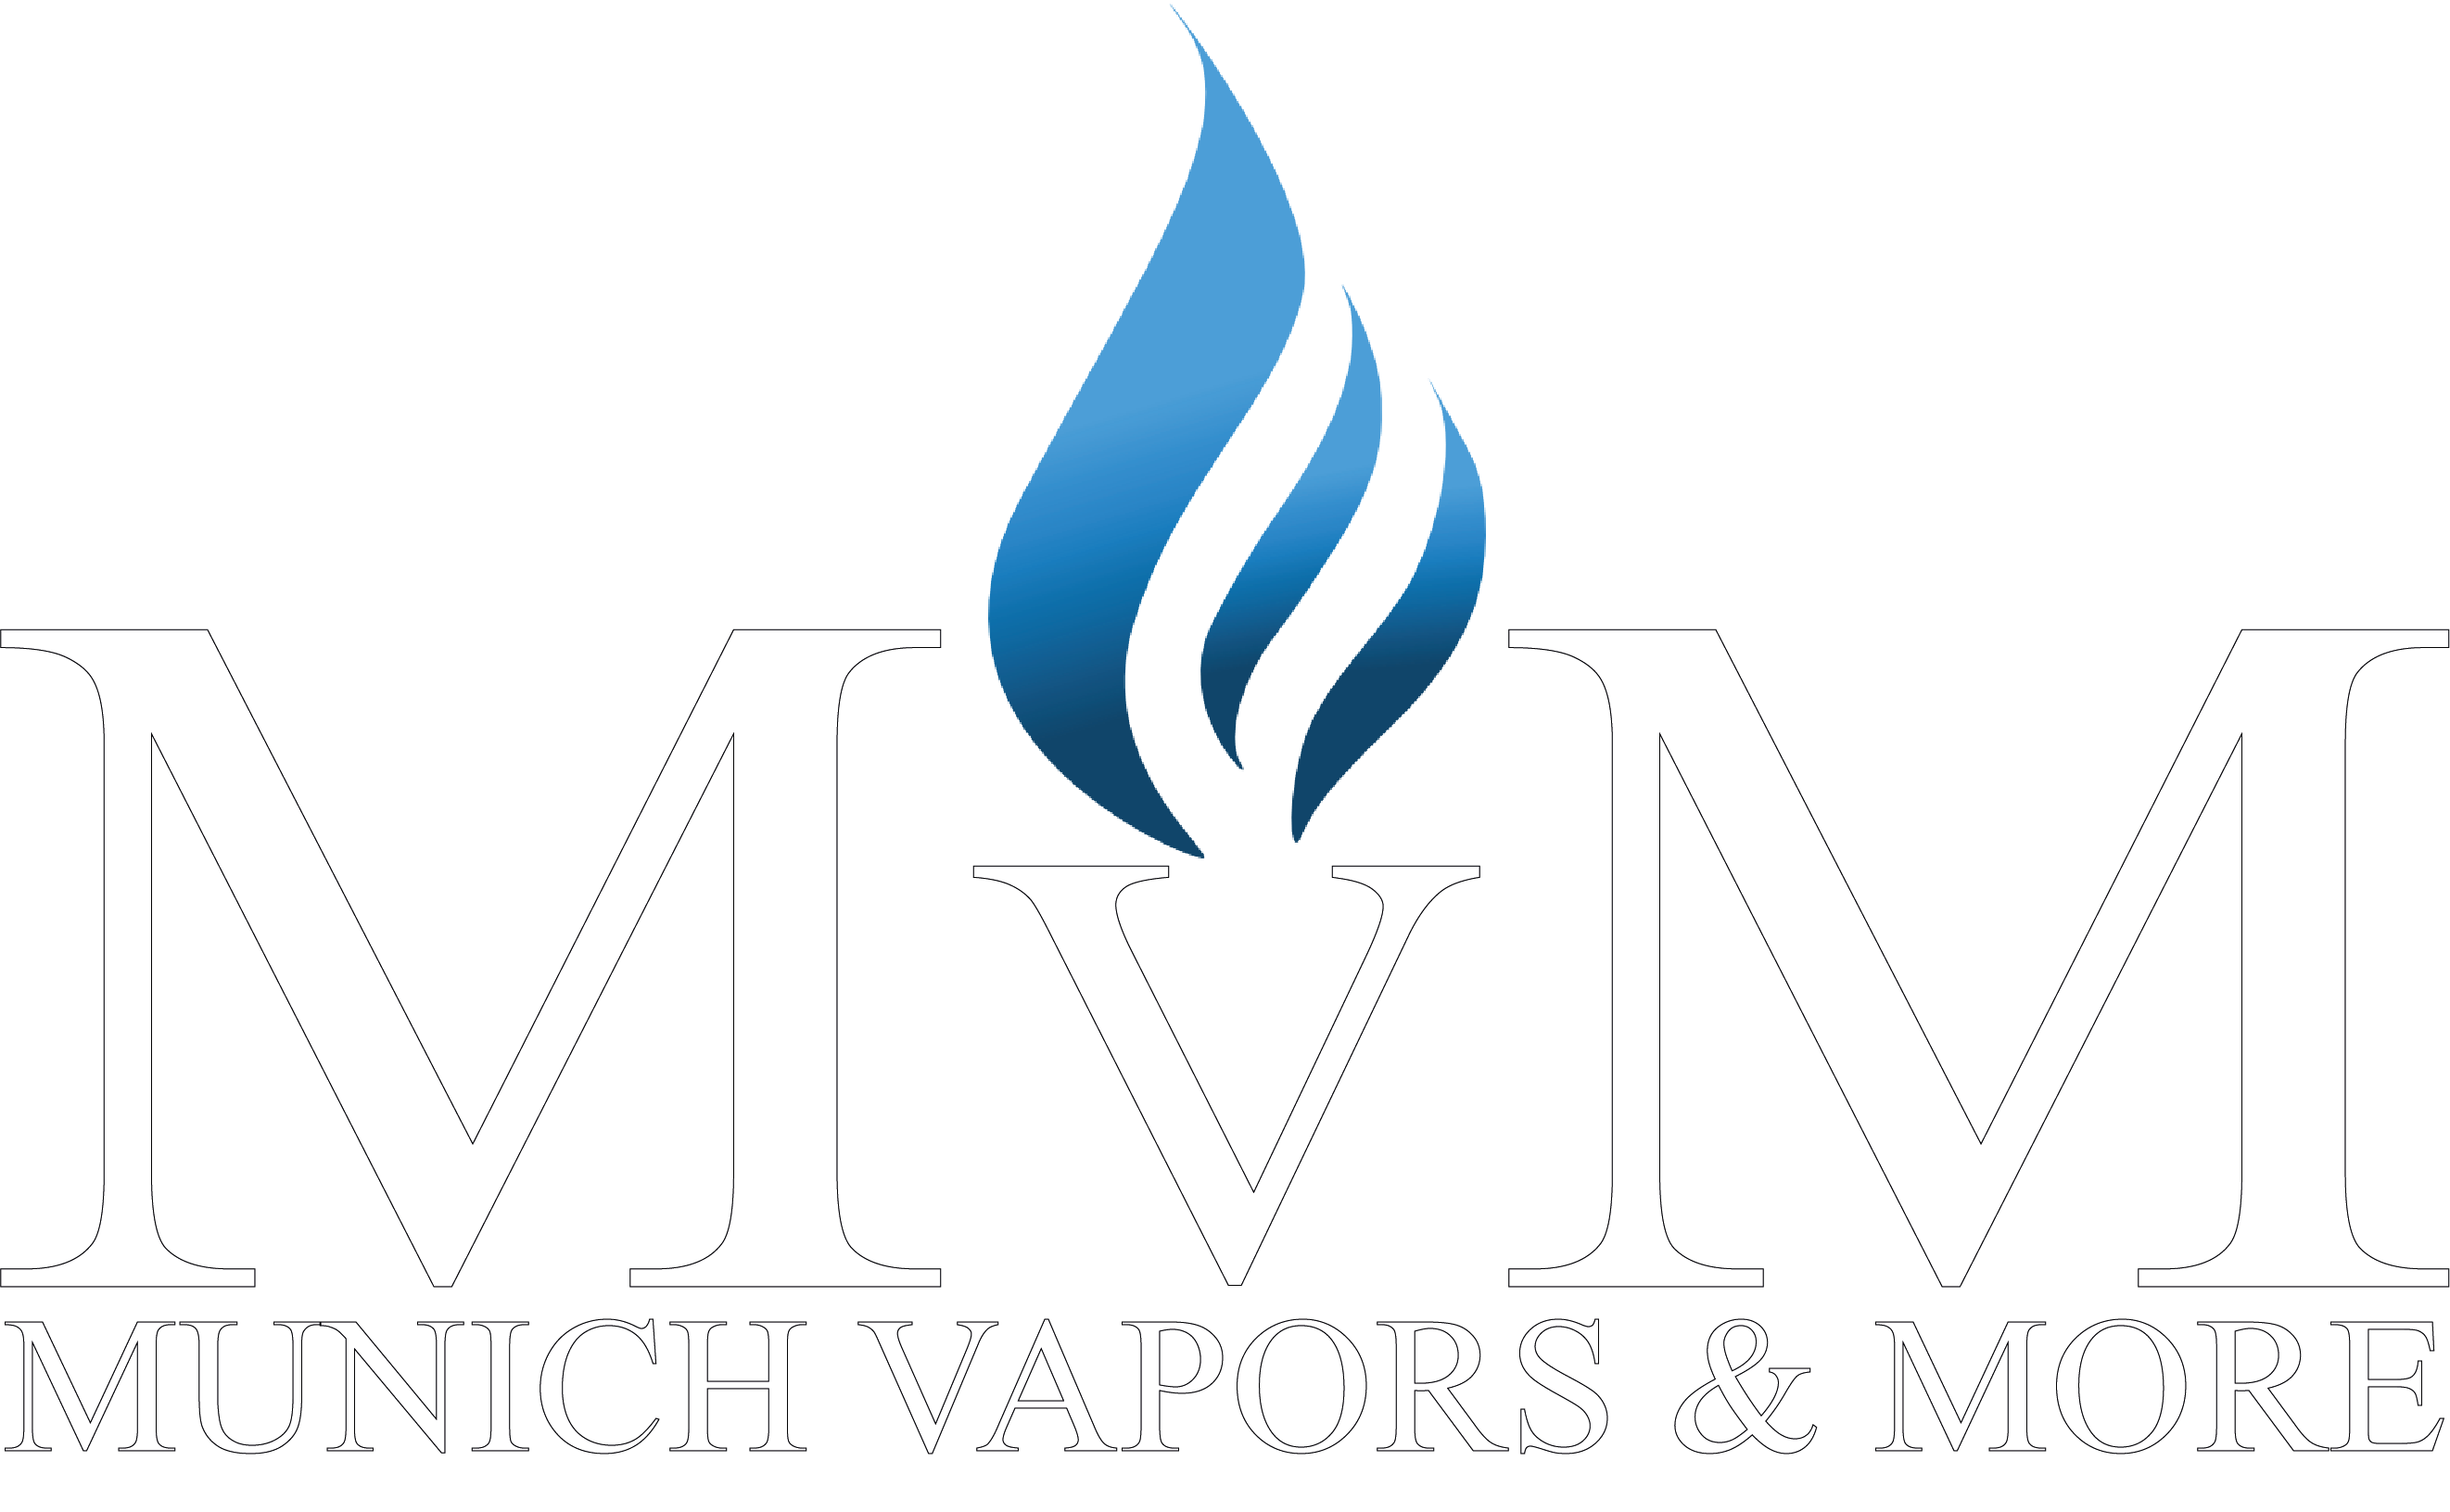 munich vapors and more